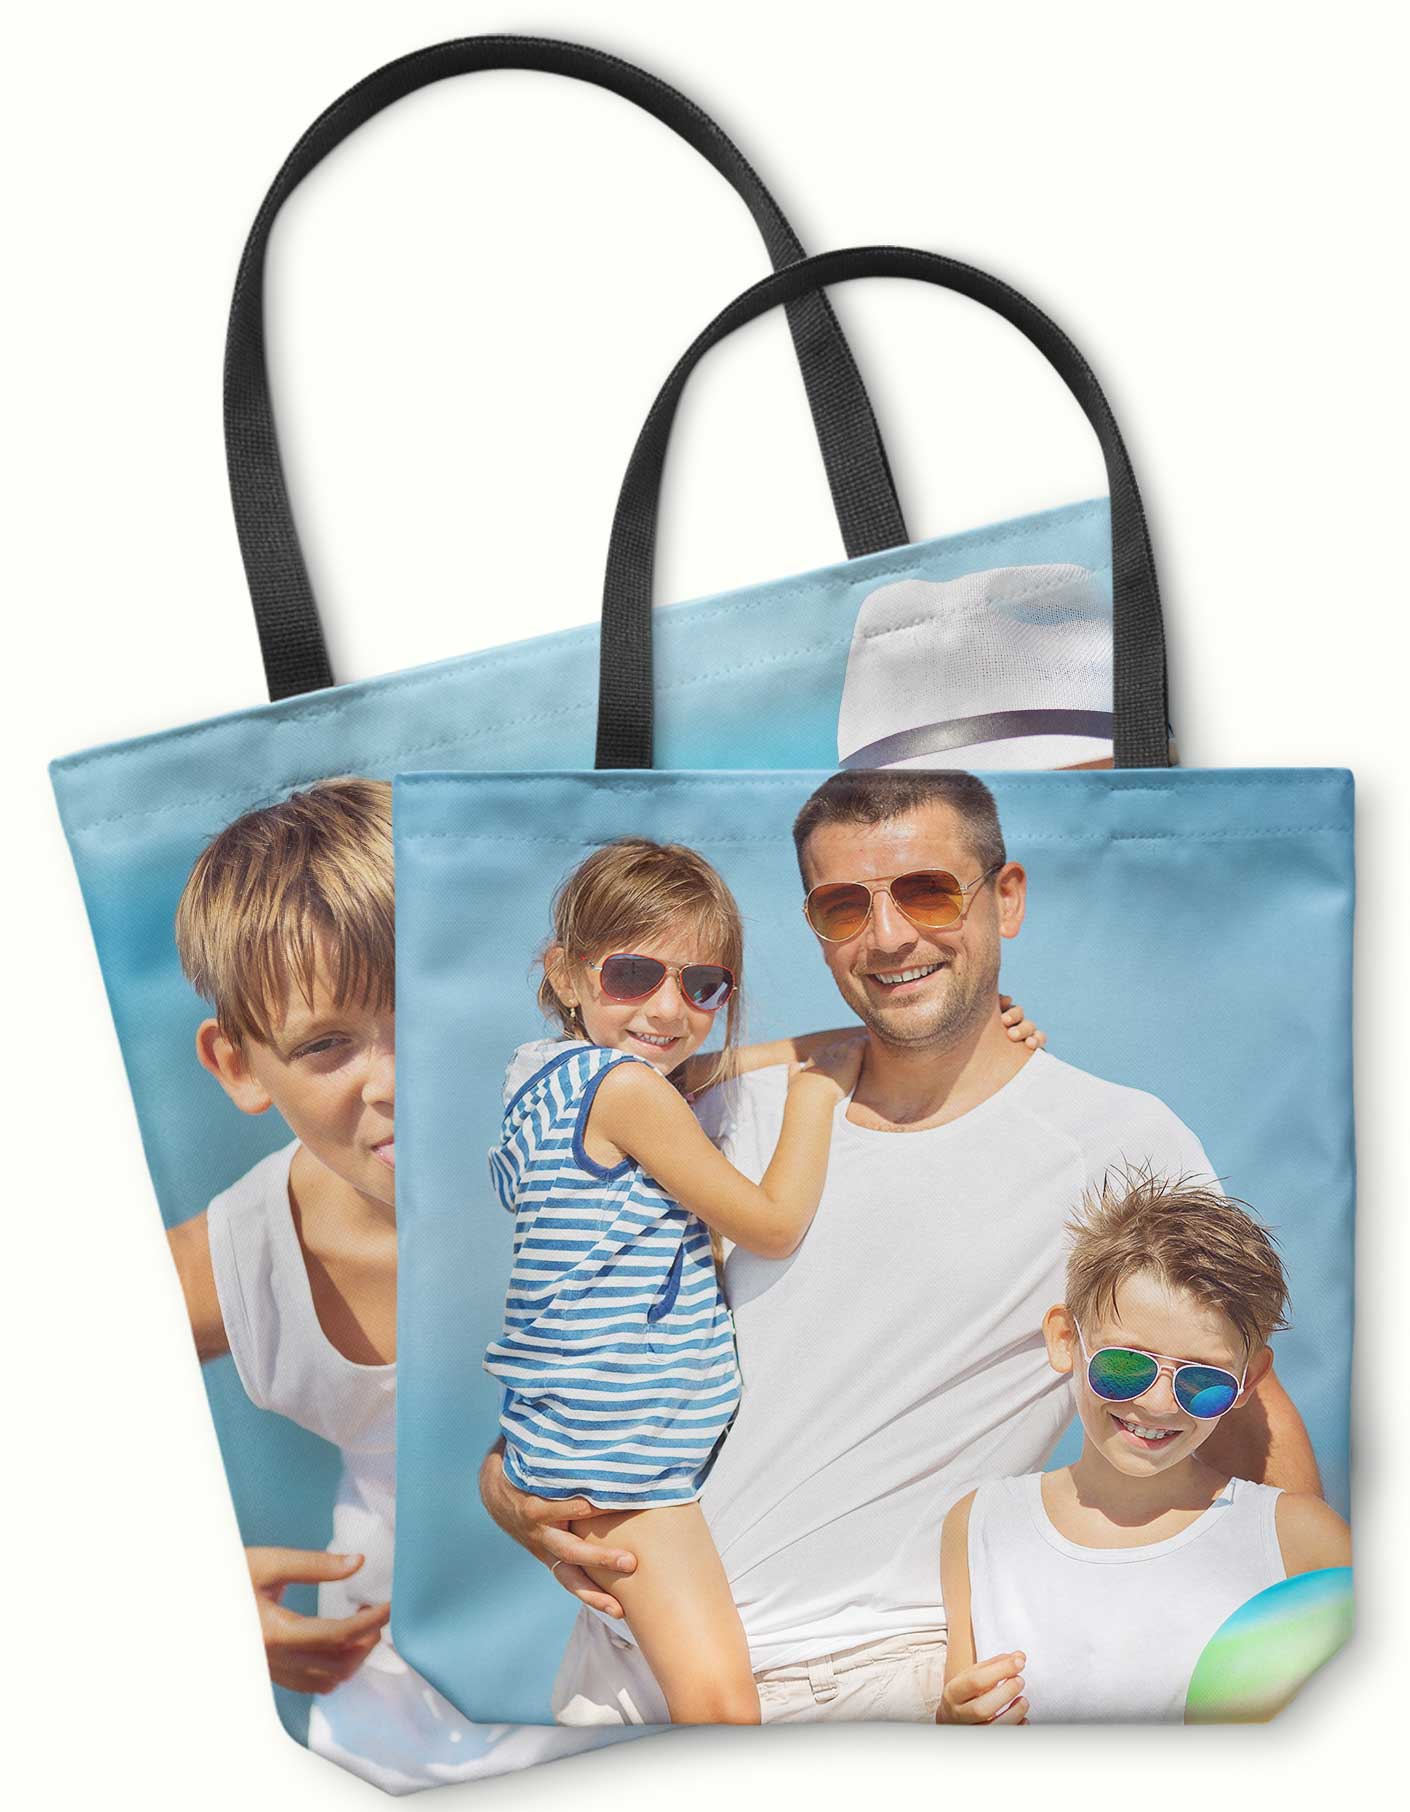 Share more than 80 custom hand bag super hot - esthdonghoadian